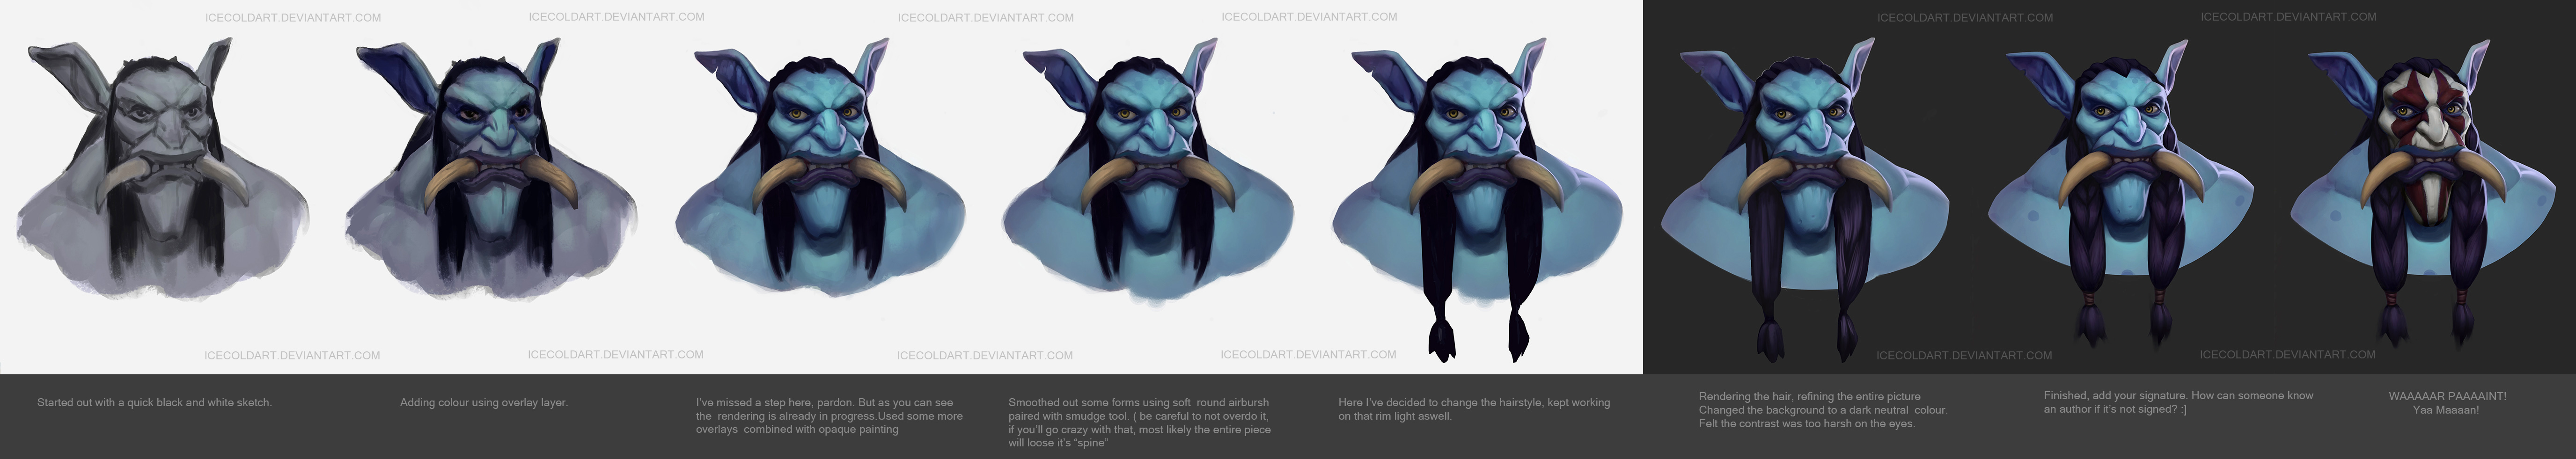 Warcraft Troll Process